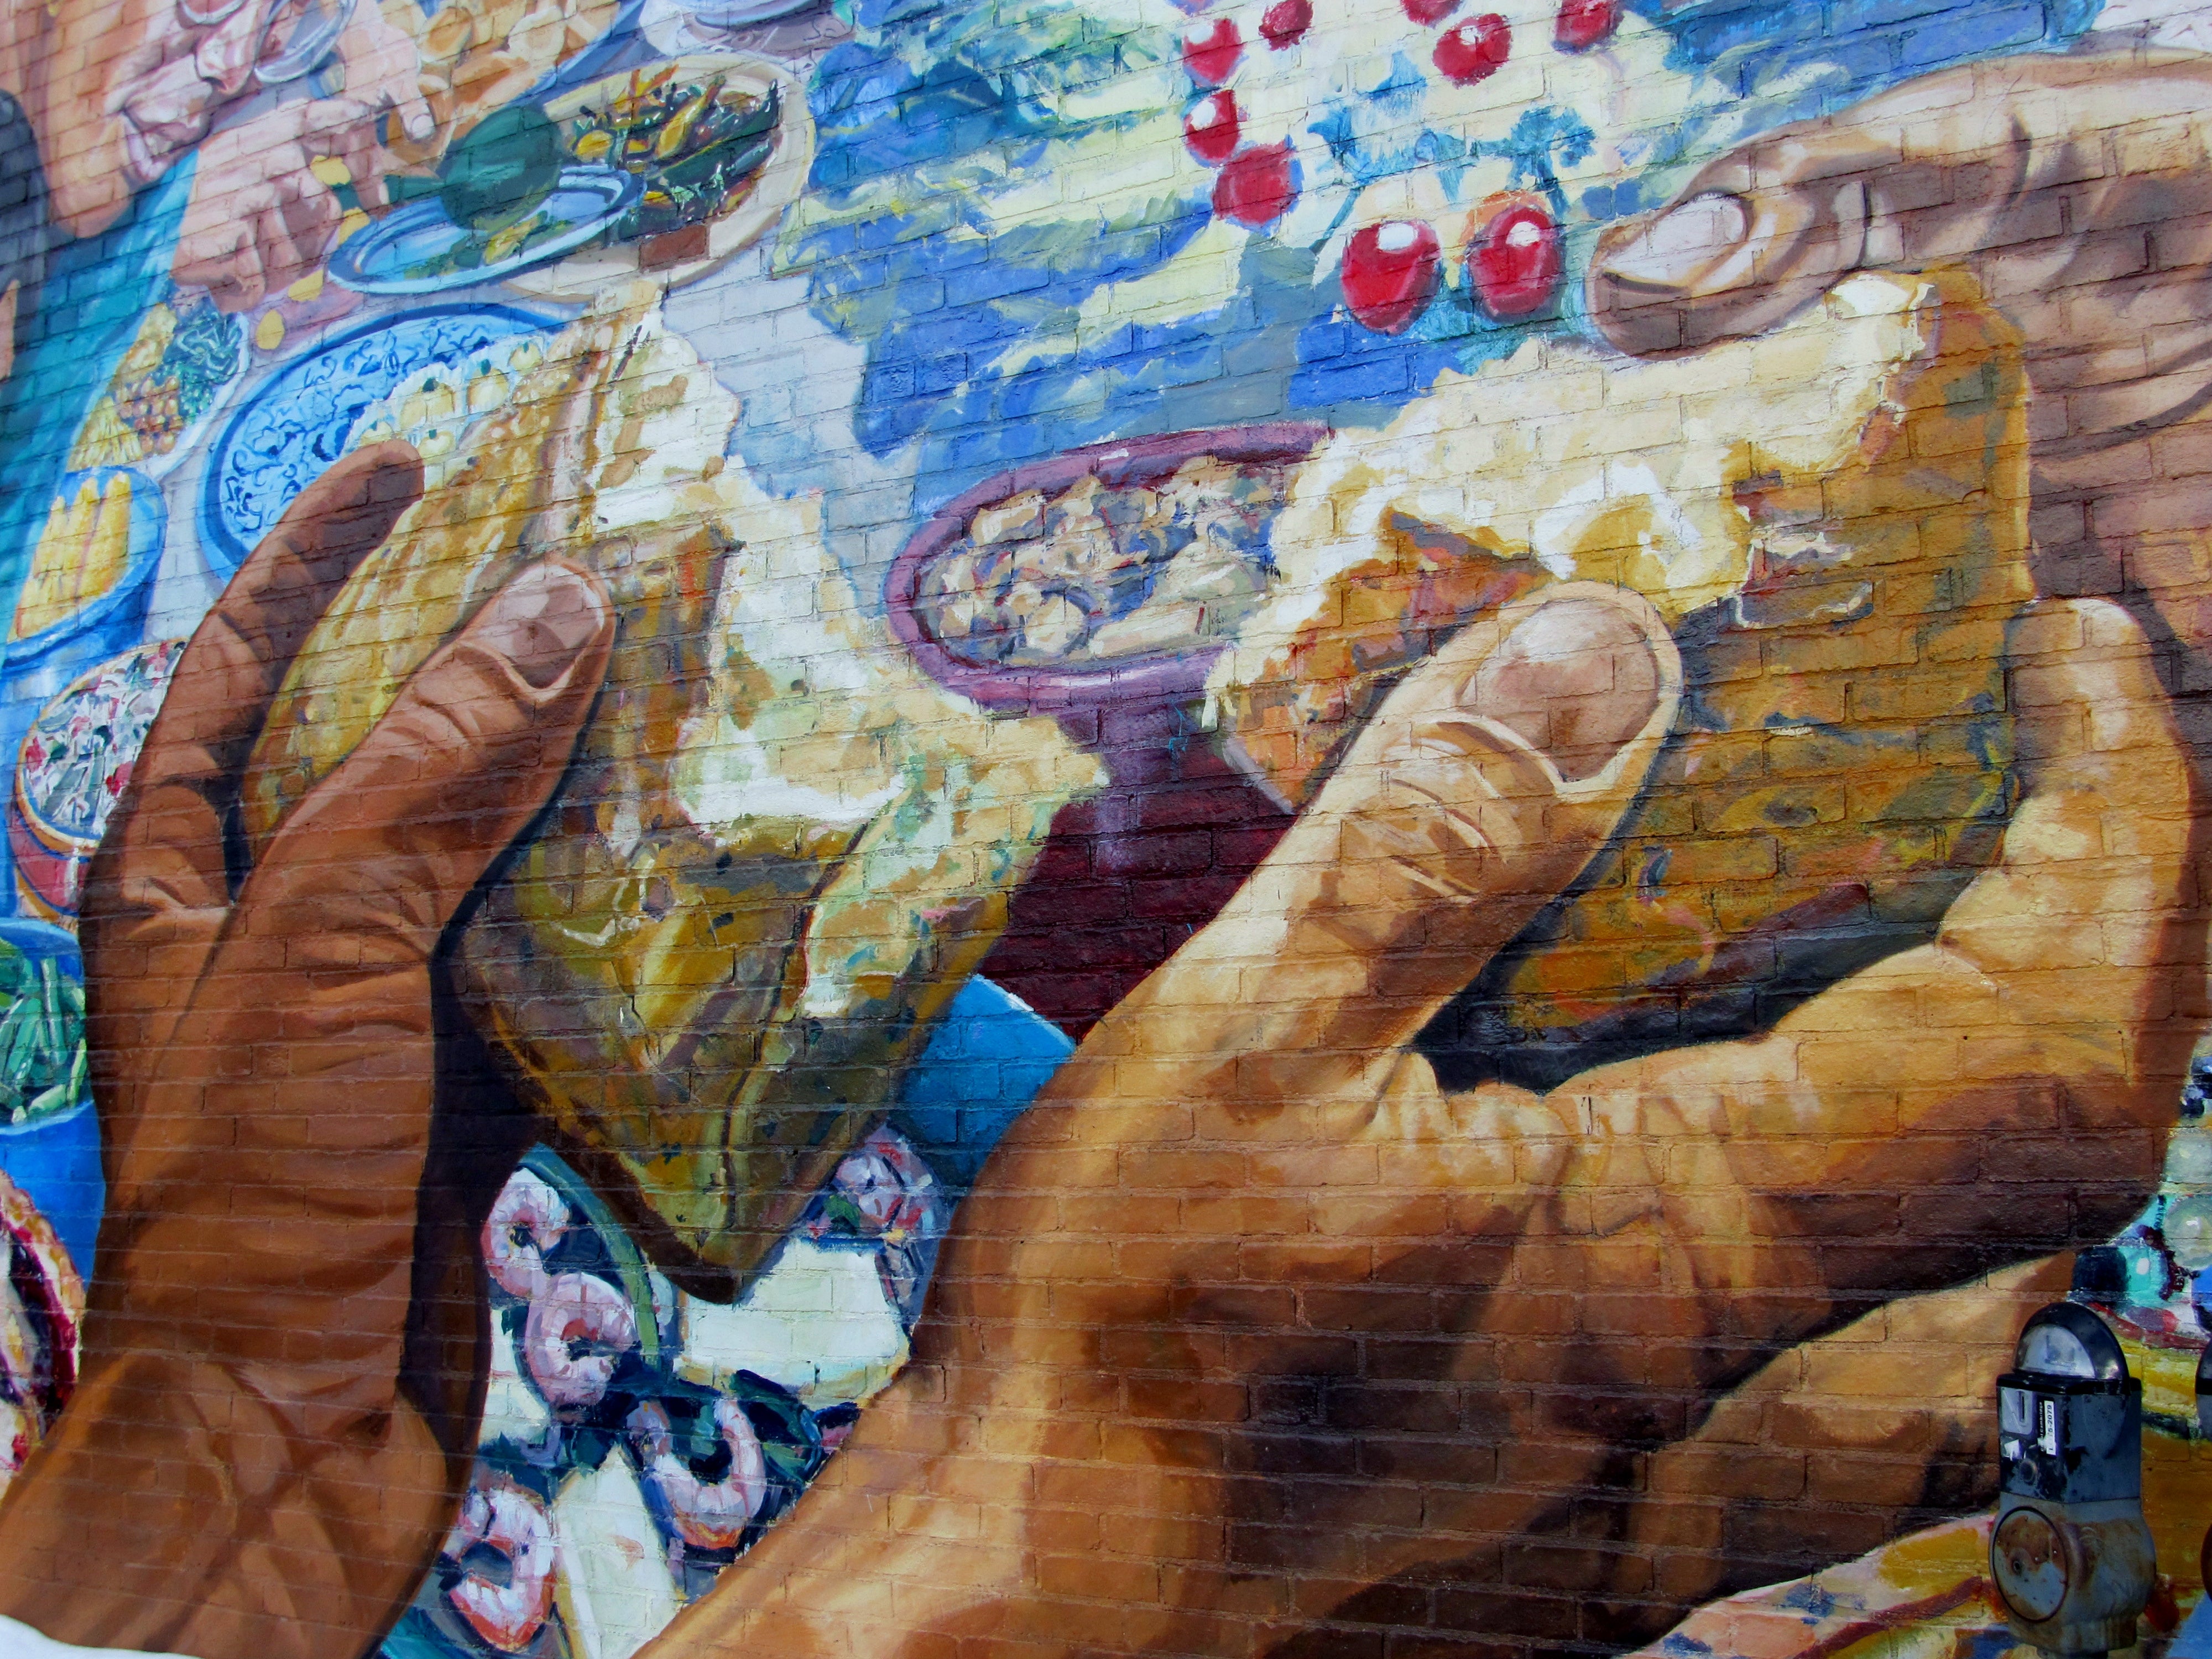 Breaking Bread - Mural by David Fitcher, Photo by Lorianne di Sabato